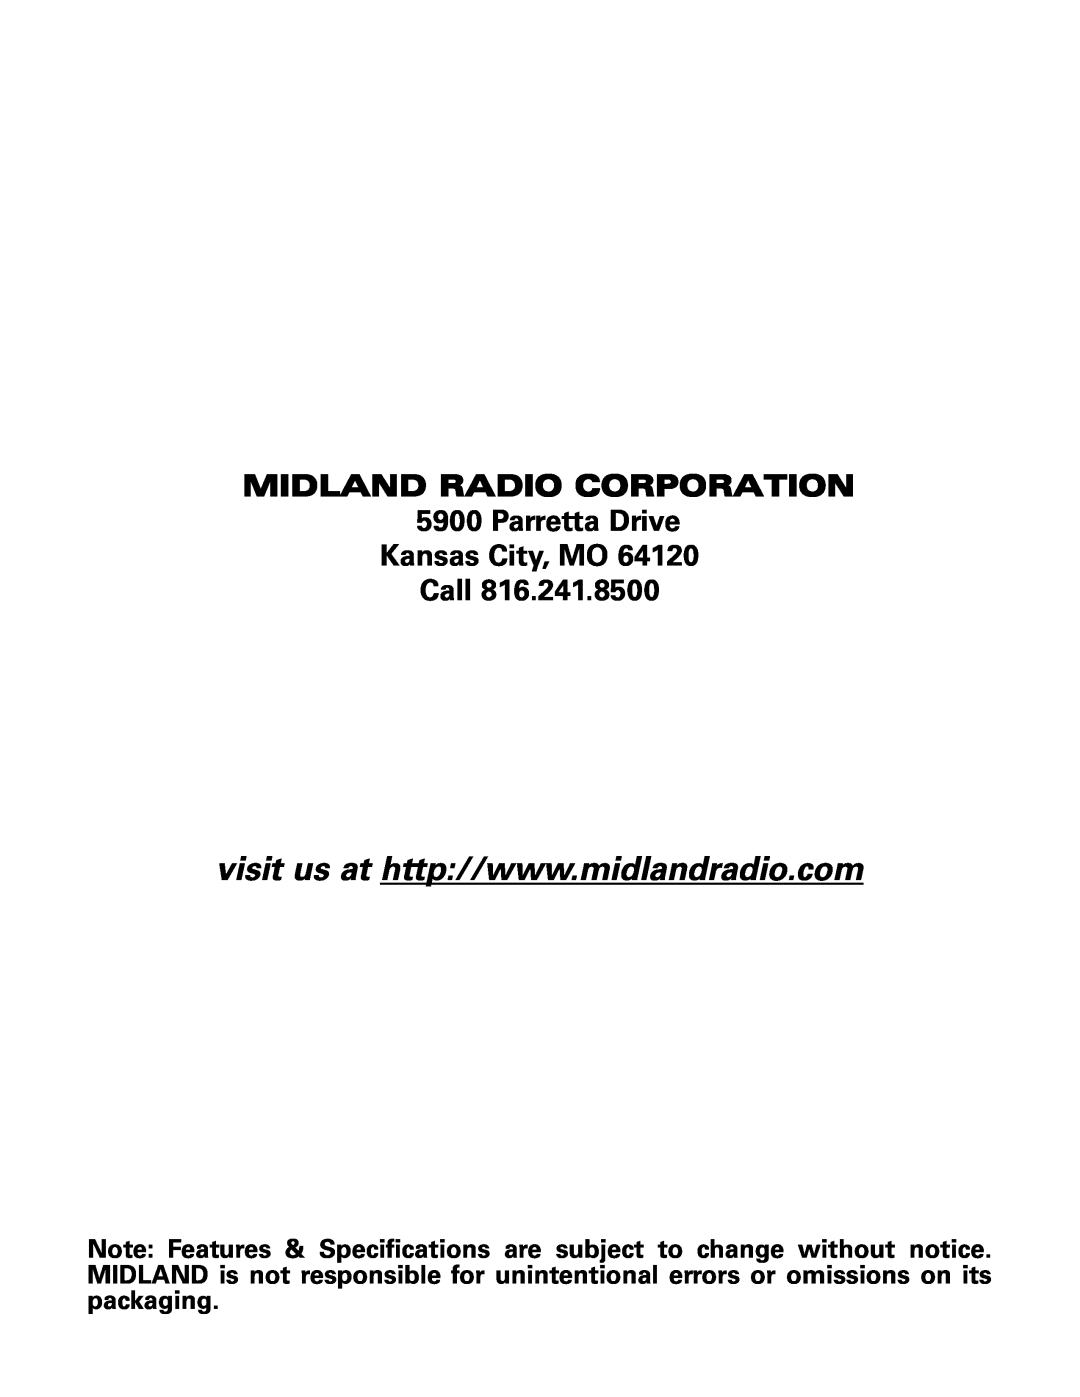 Midland Radio LXT460 Series owner manual MIDLAND RADIO CORPORATION 5900 Parretta Drive, Kansas City, MO Call 